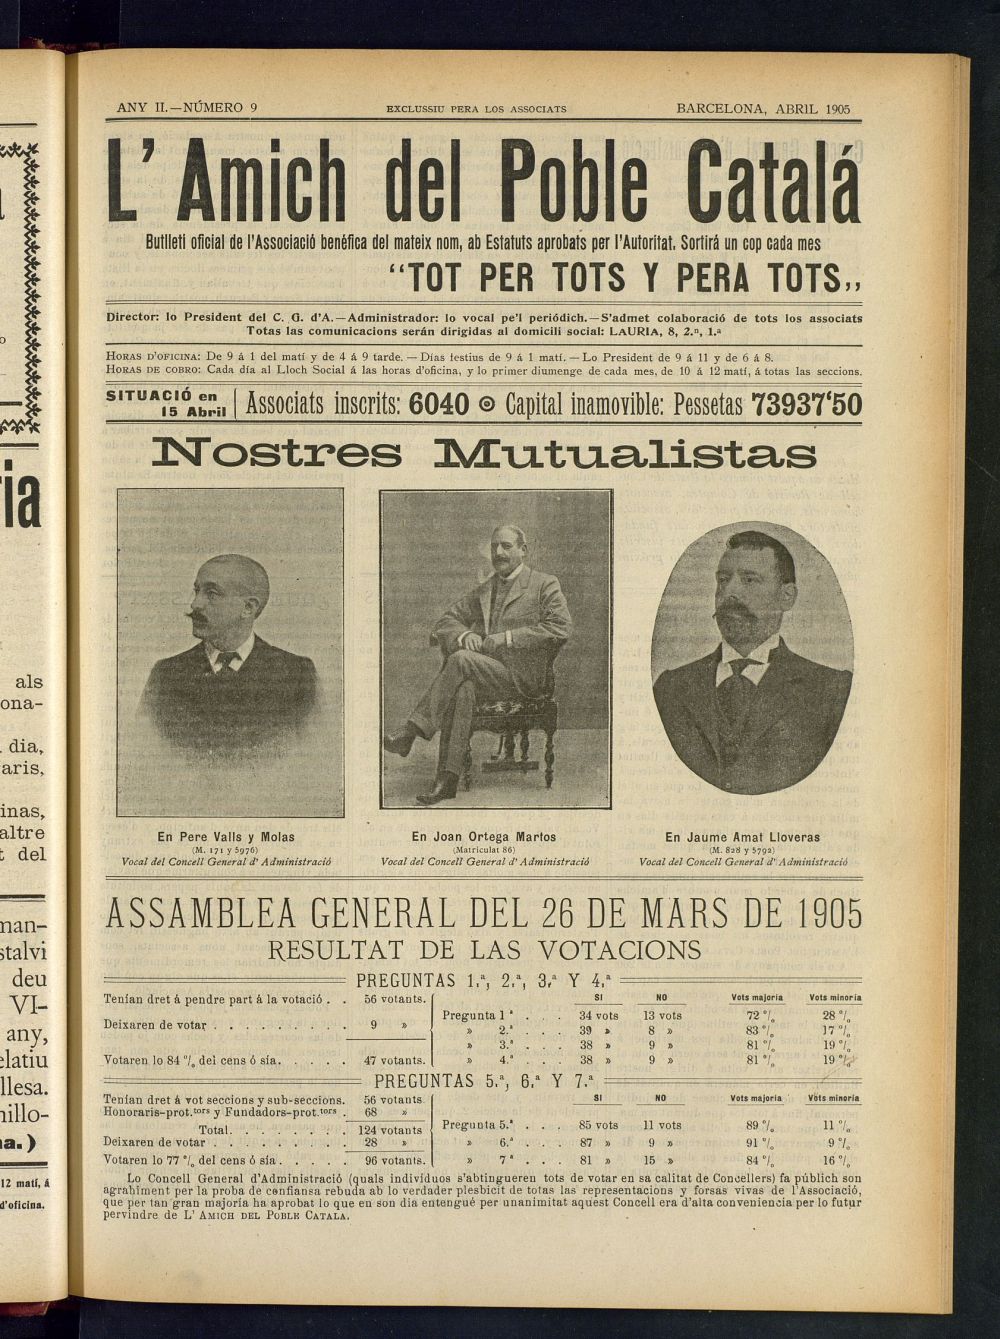 Lamich del poble catal: butllet oficial de lassociacio, ques publicara una volta cada mes de abril de 1905